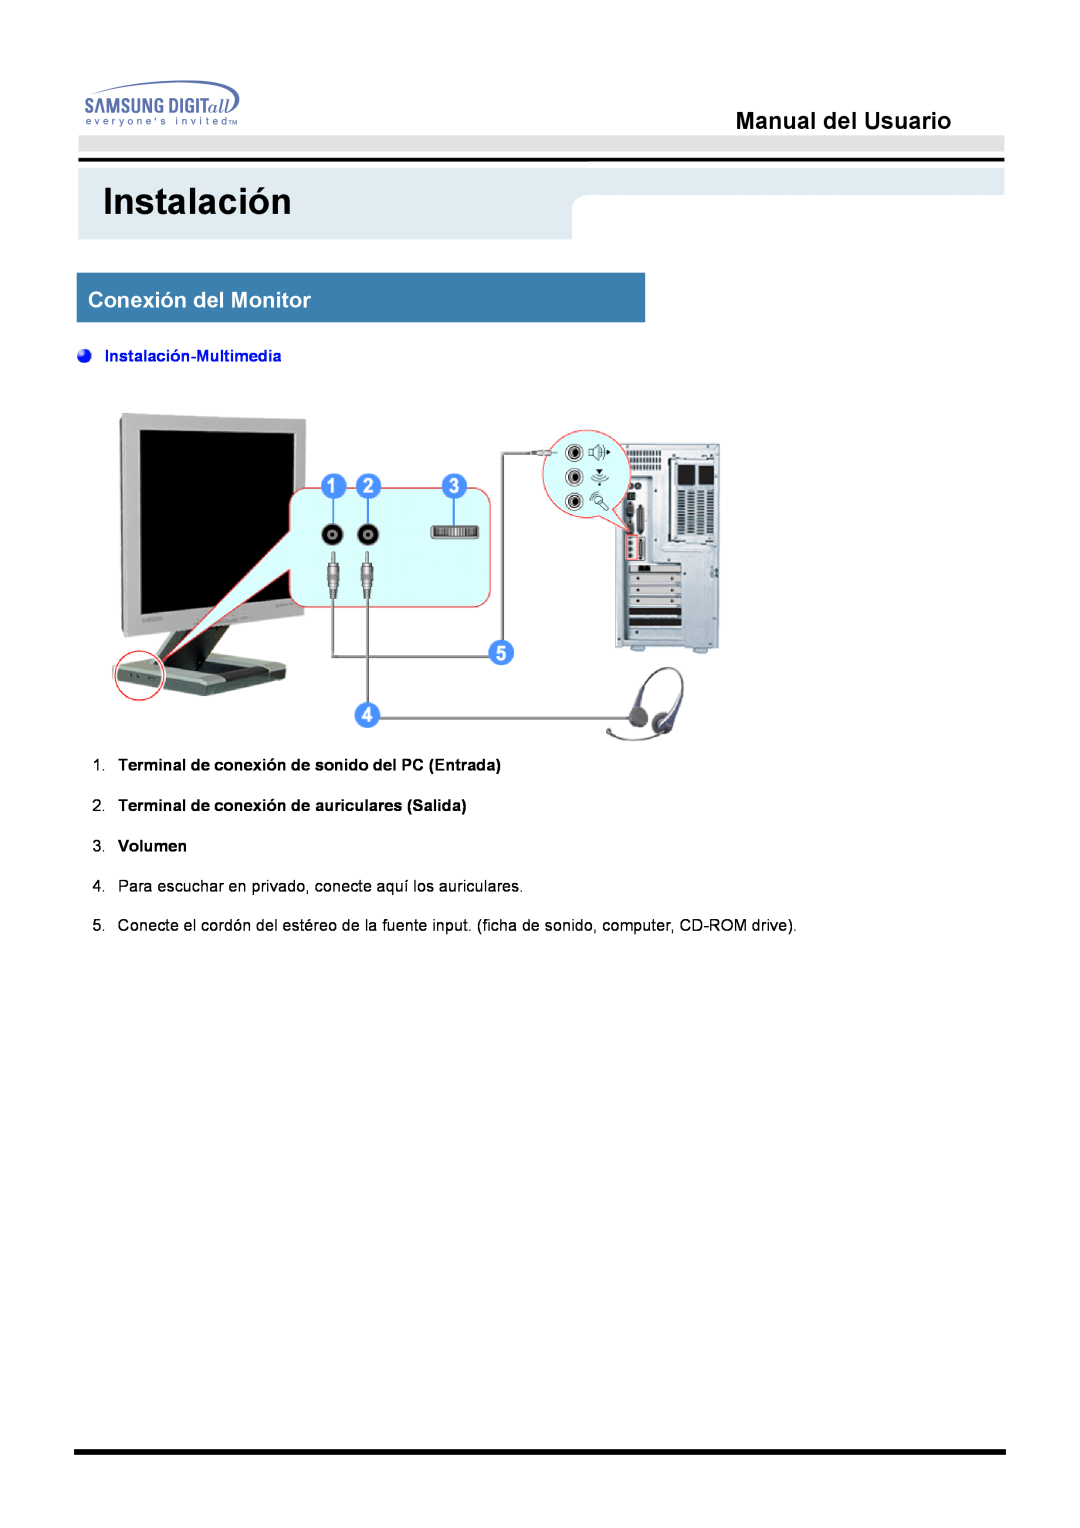 Samsung MO17ESDS/EDC, MO17ESZSZ/EDC, MO17ESZS/EDC manual Conexión del Monitor, Manual del Usuario, Instalación-Multimedia 